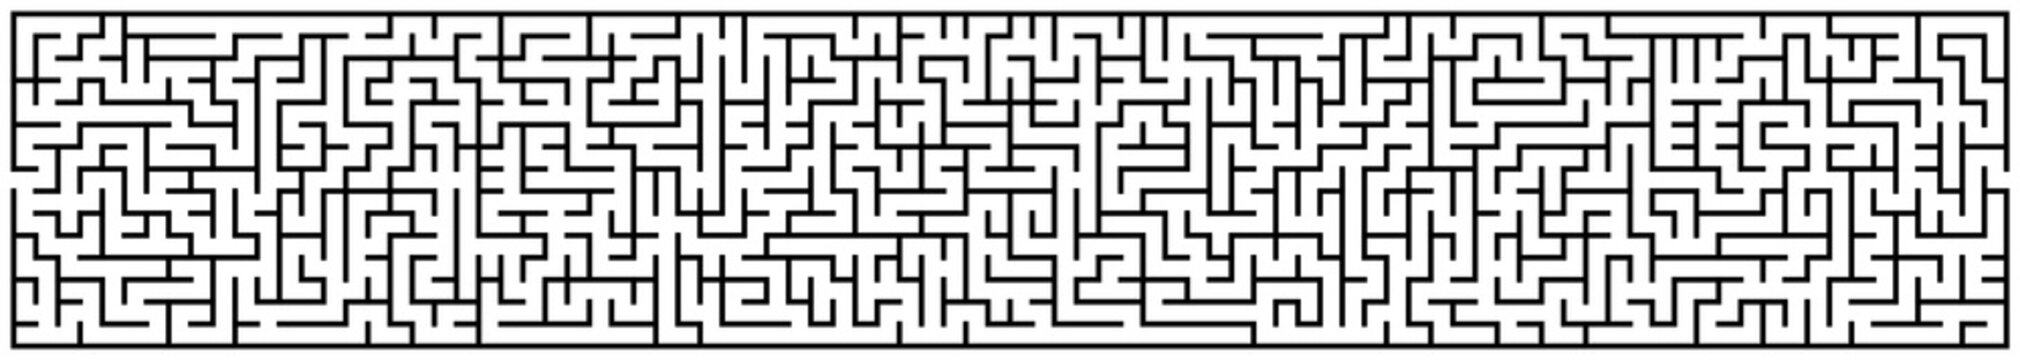 Schwieriges Rätsel Labyrinth im Panorama Format